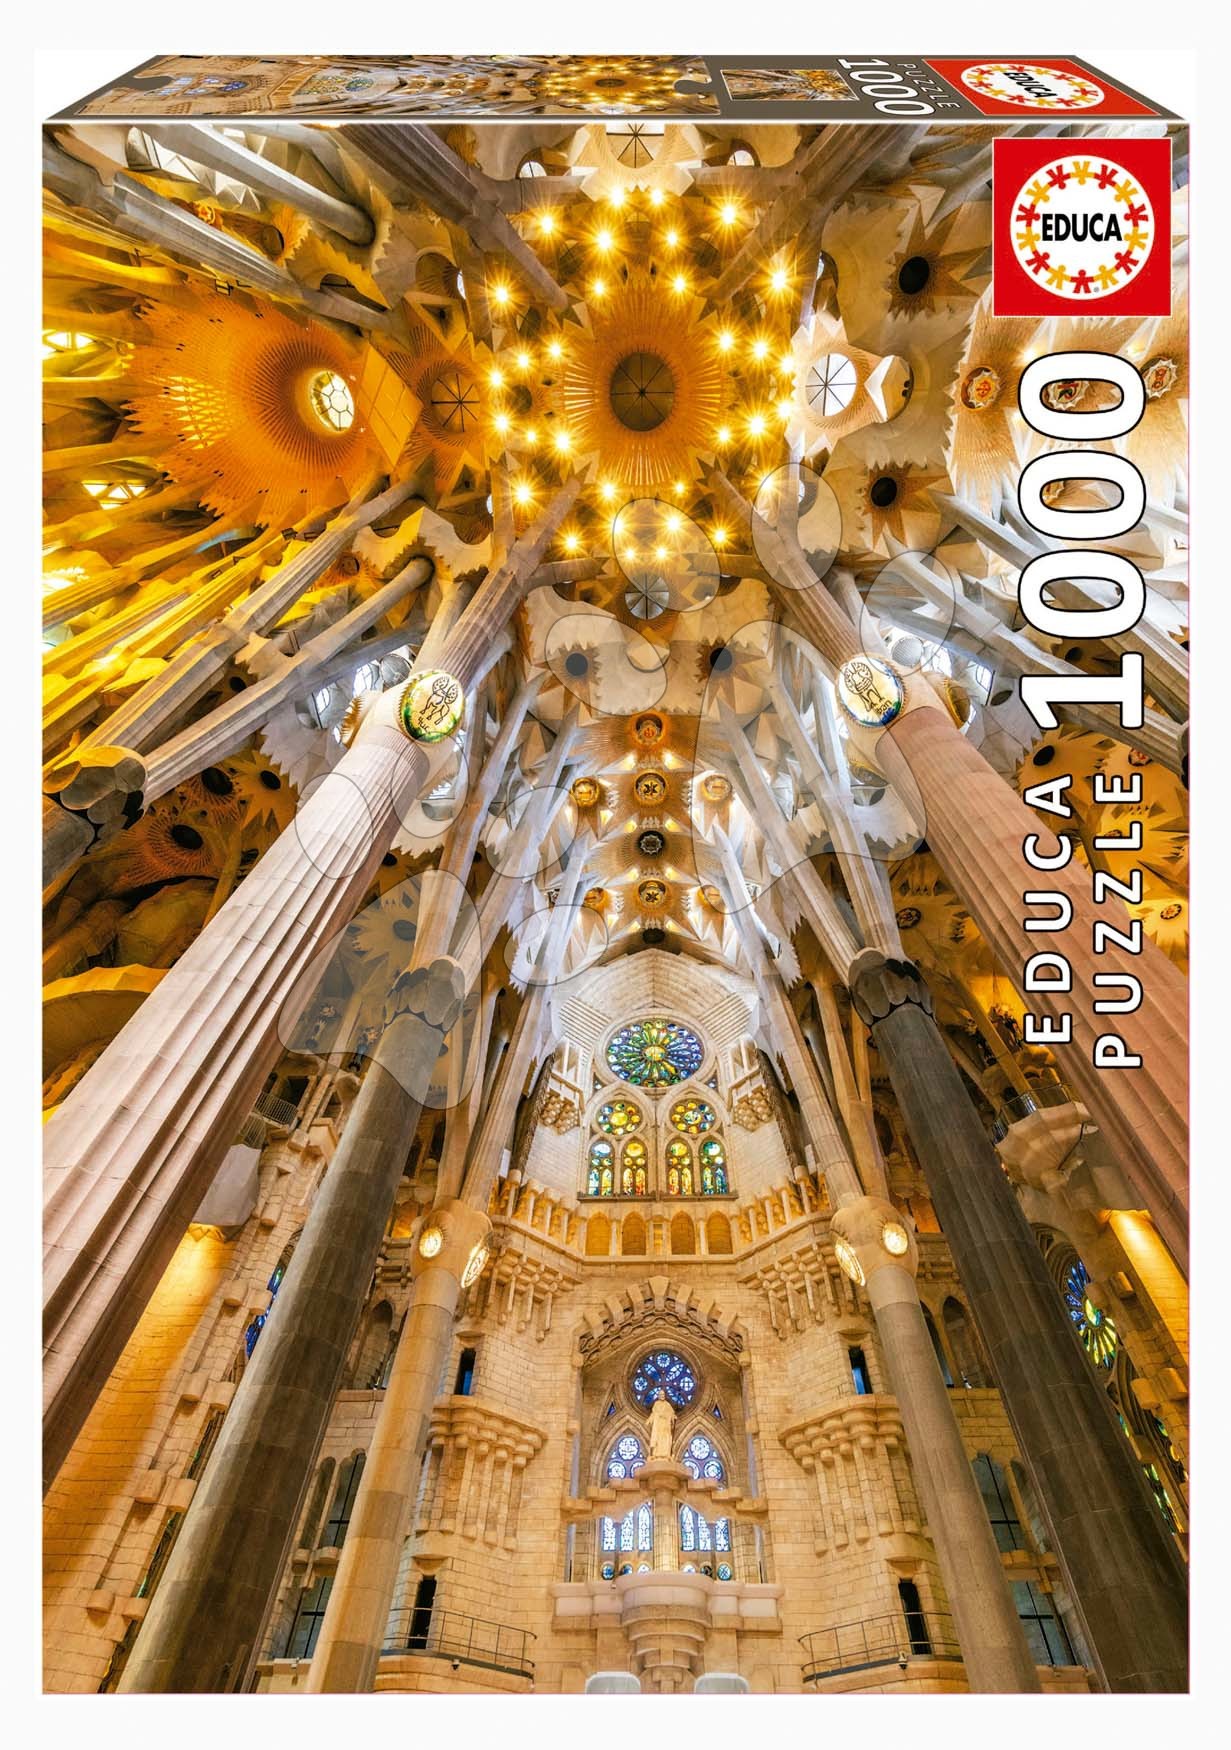 Puzzle Sagrada Família Interior Educa 1000 dílků a Fix lepidlo